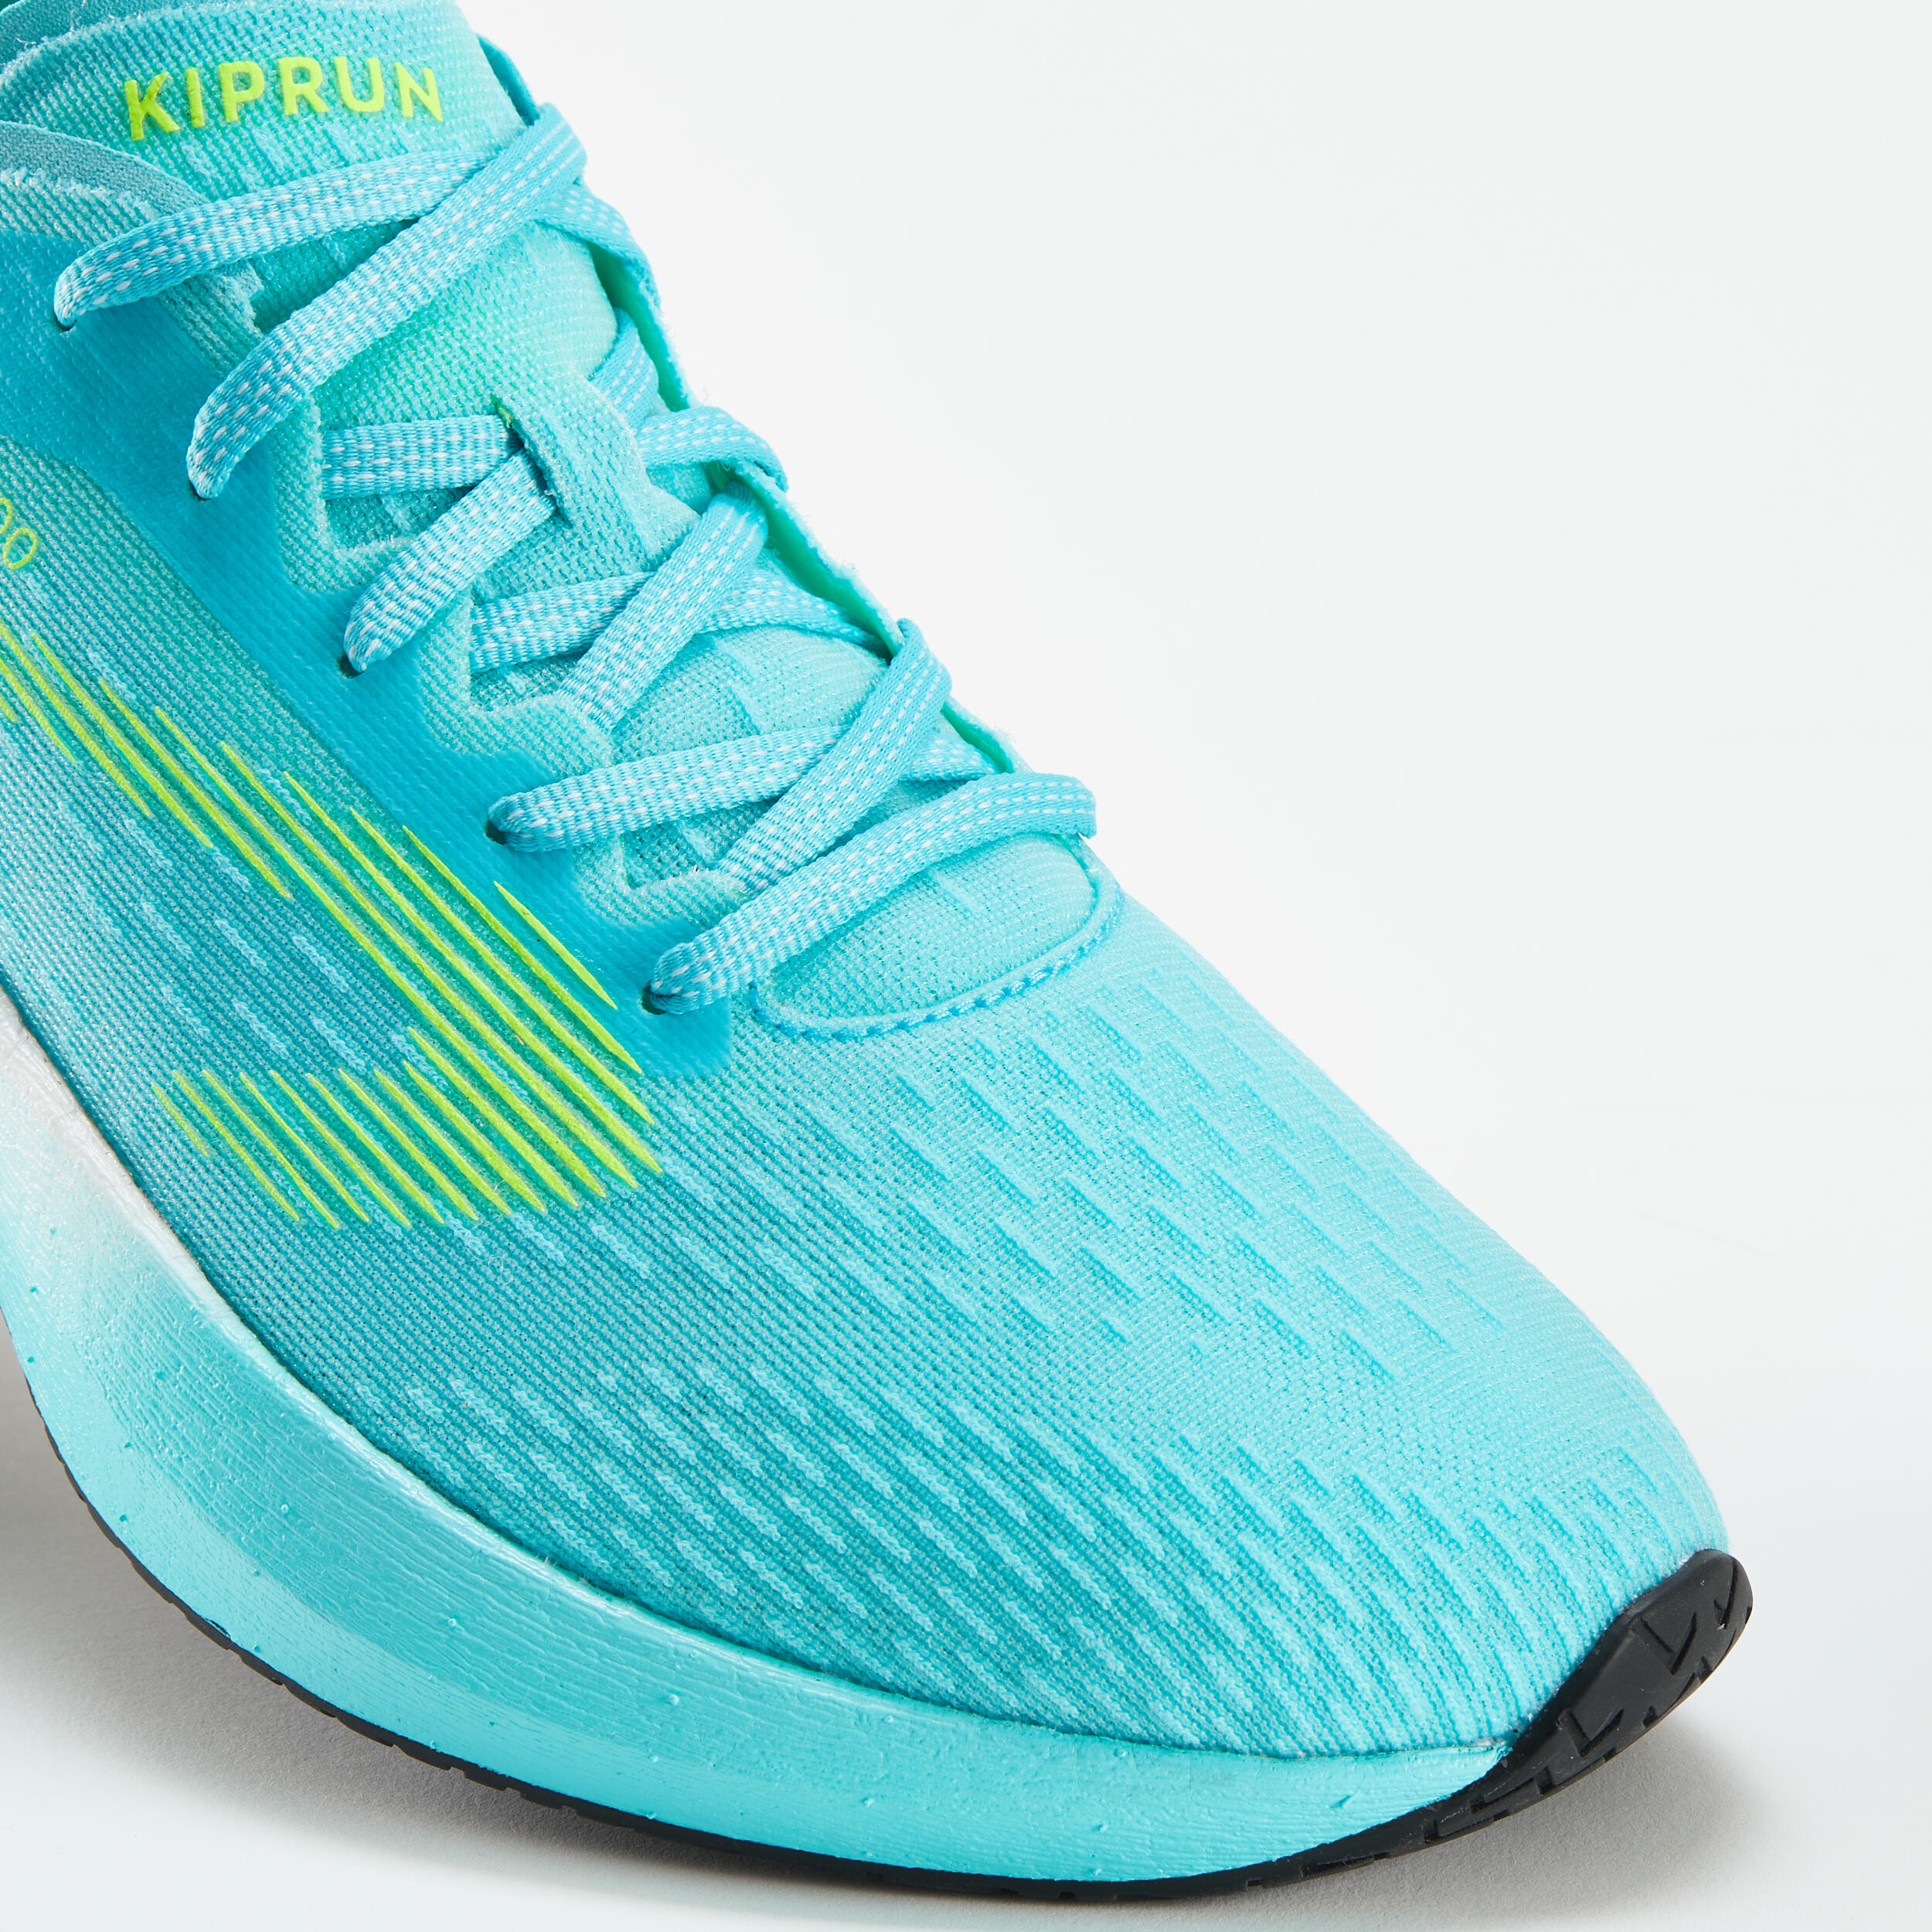 Chaussures de course homme – KD 900 - KIPRUN